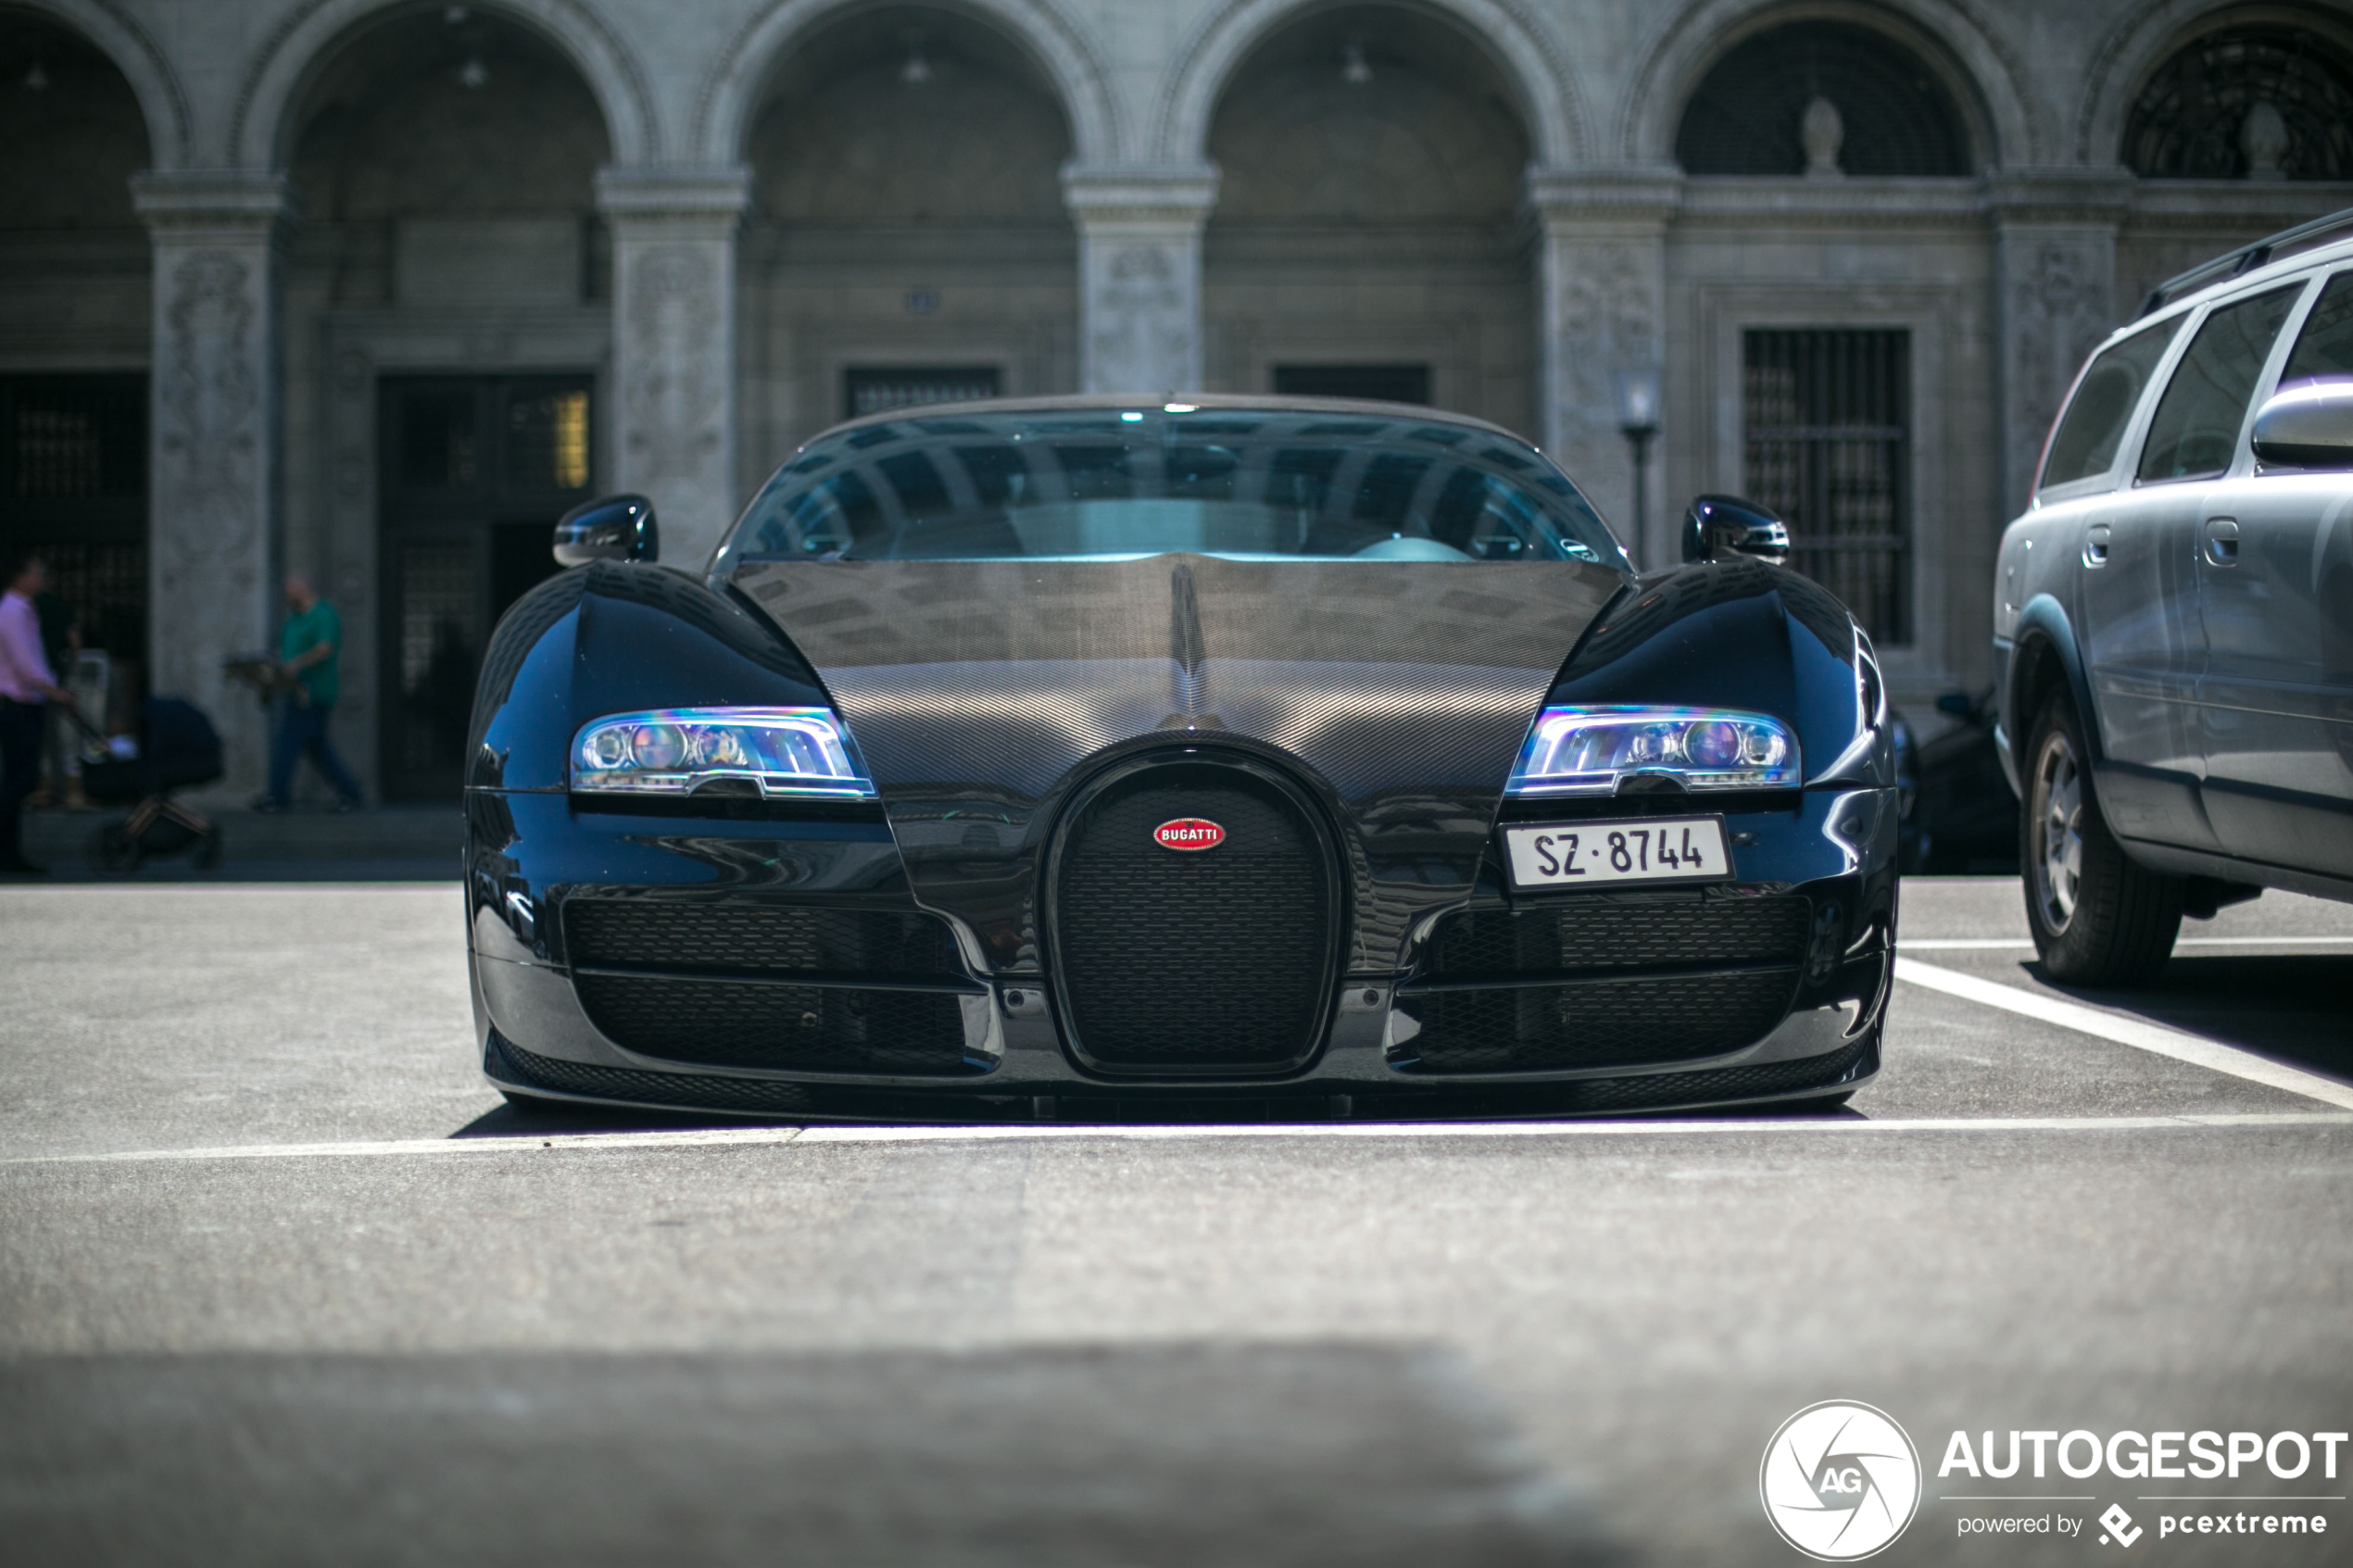 Bugatti Veyron 16.4 Super Sport maakt indruk met zijn vleugel